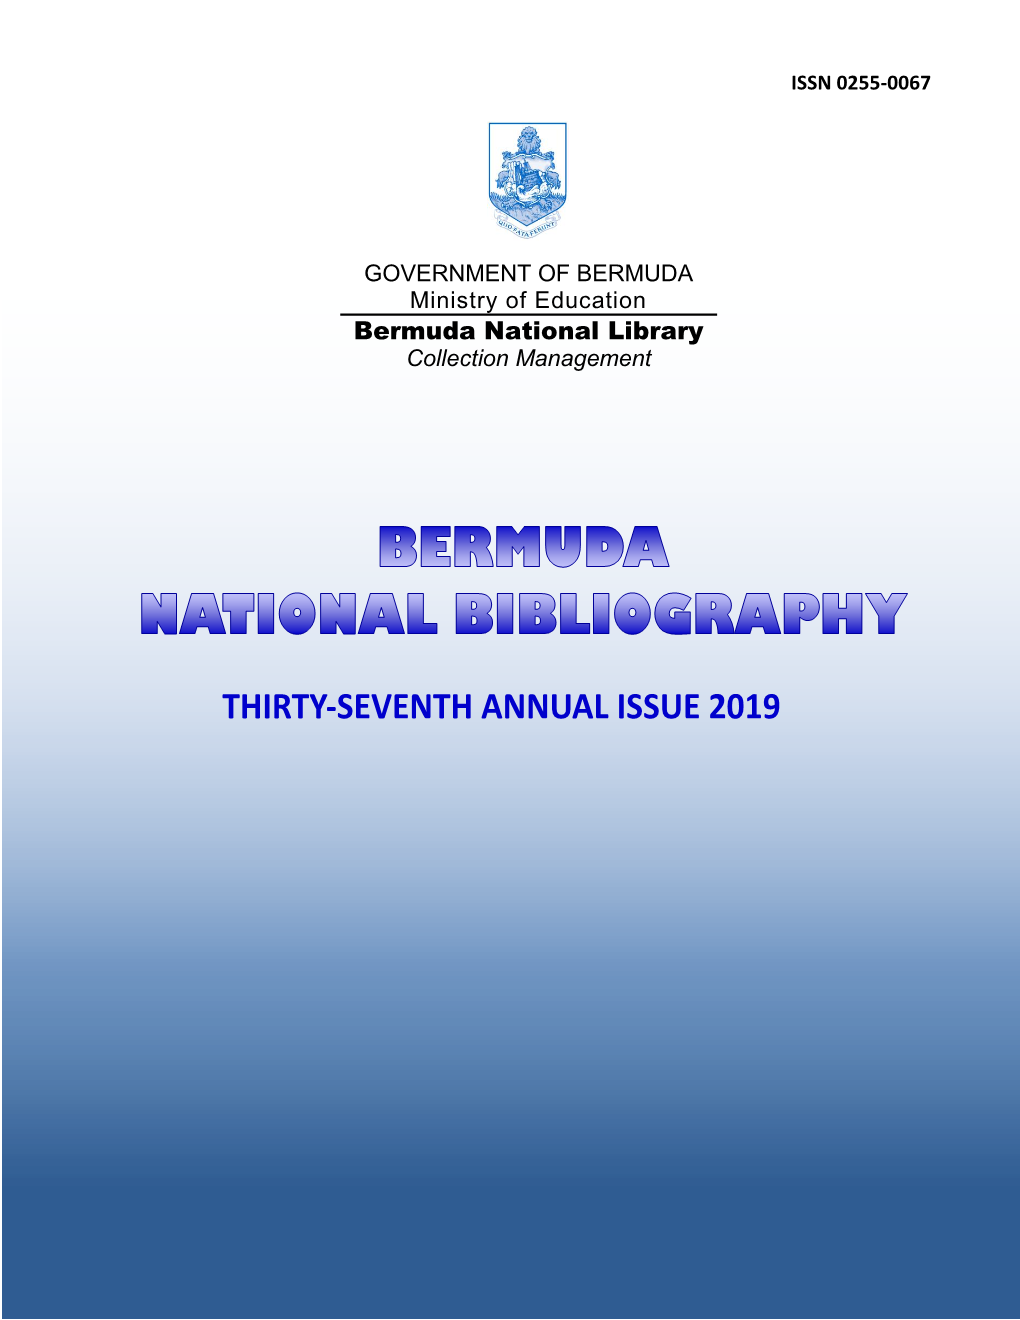 Bermuda National Bibliography.Jan-Dec 2019